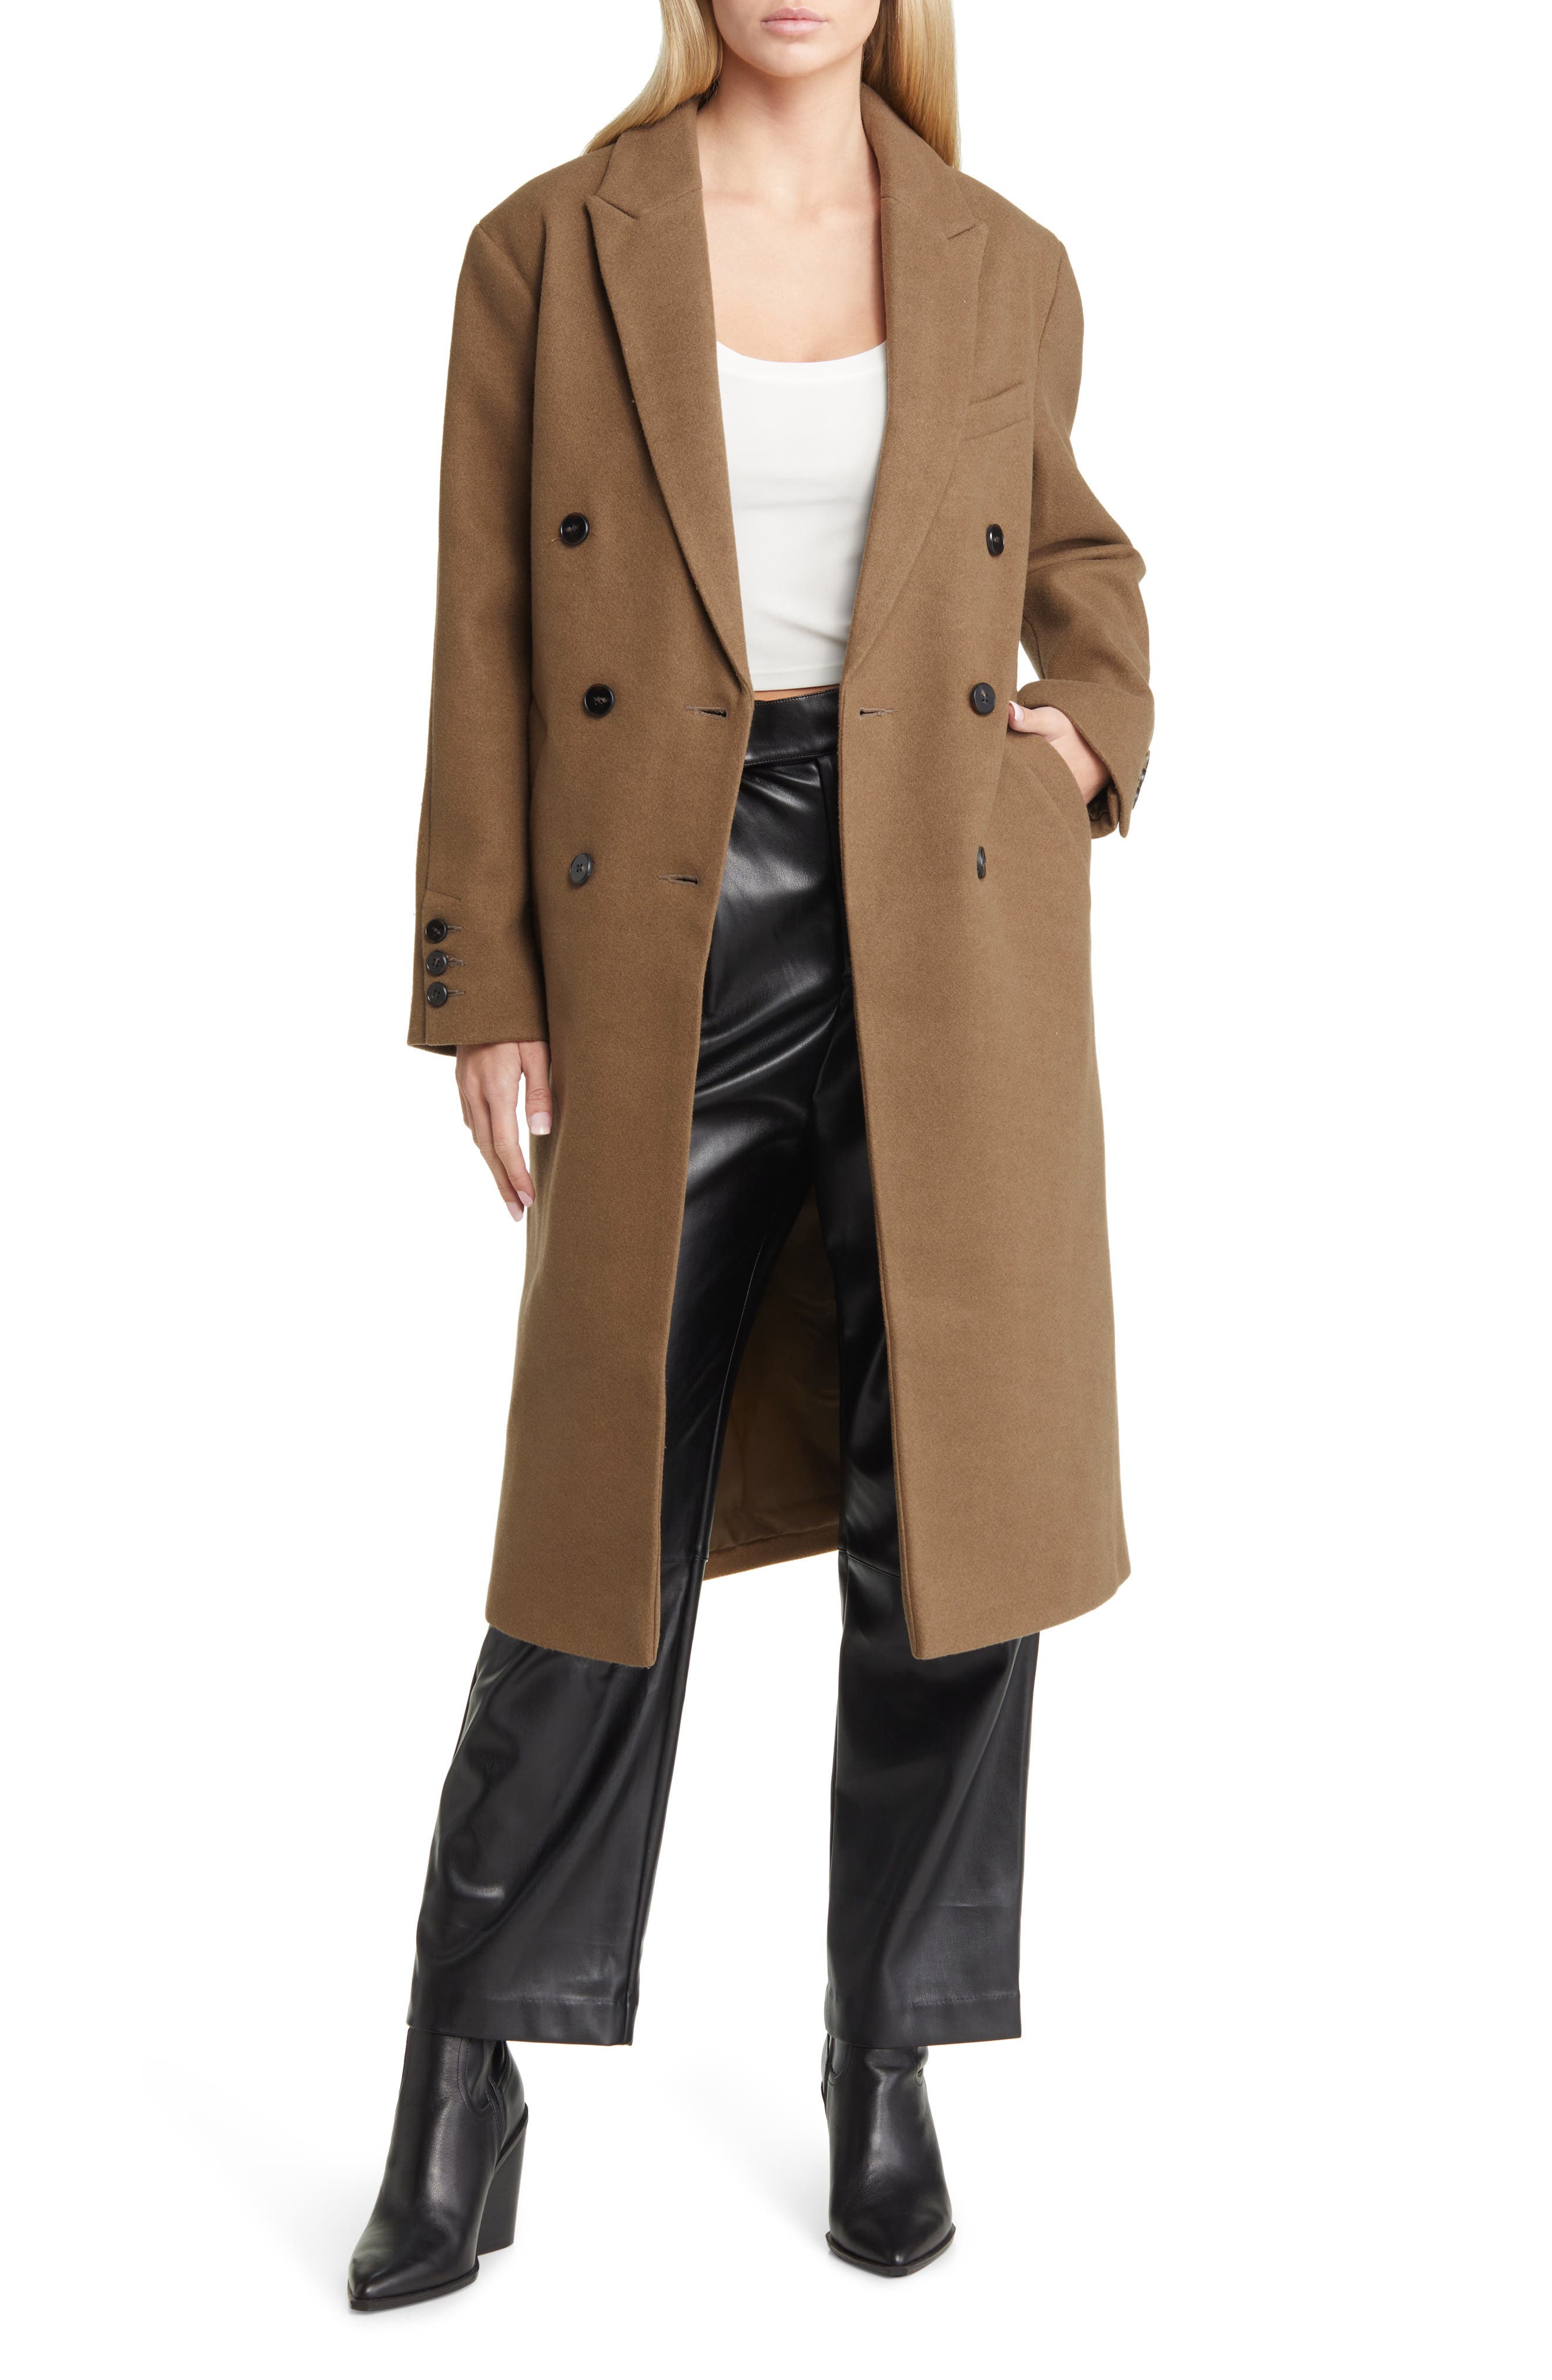 Wenini Women Fashion Winter Solid Long Sleeveless Coat Loose Outerwear Jacket Long Coat with Pockets 